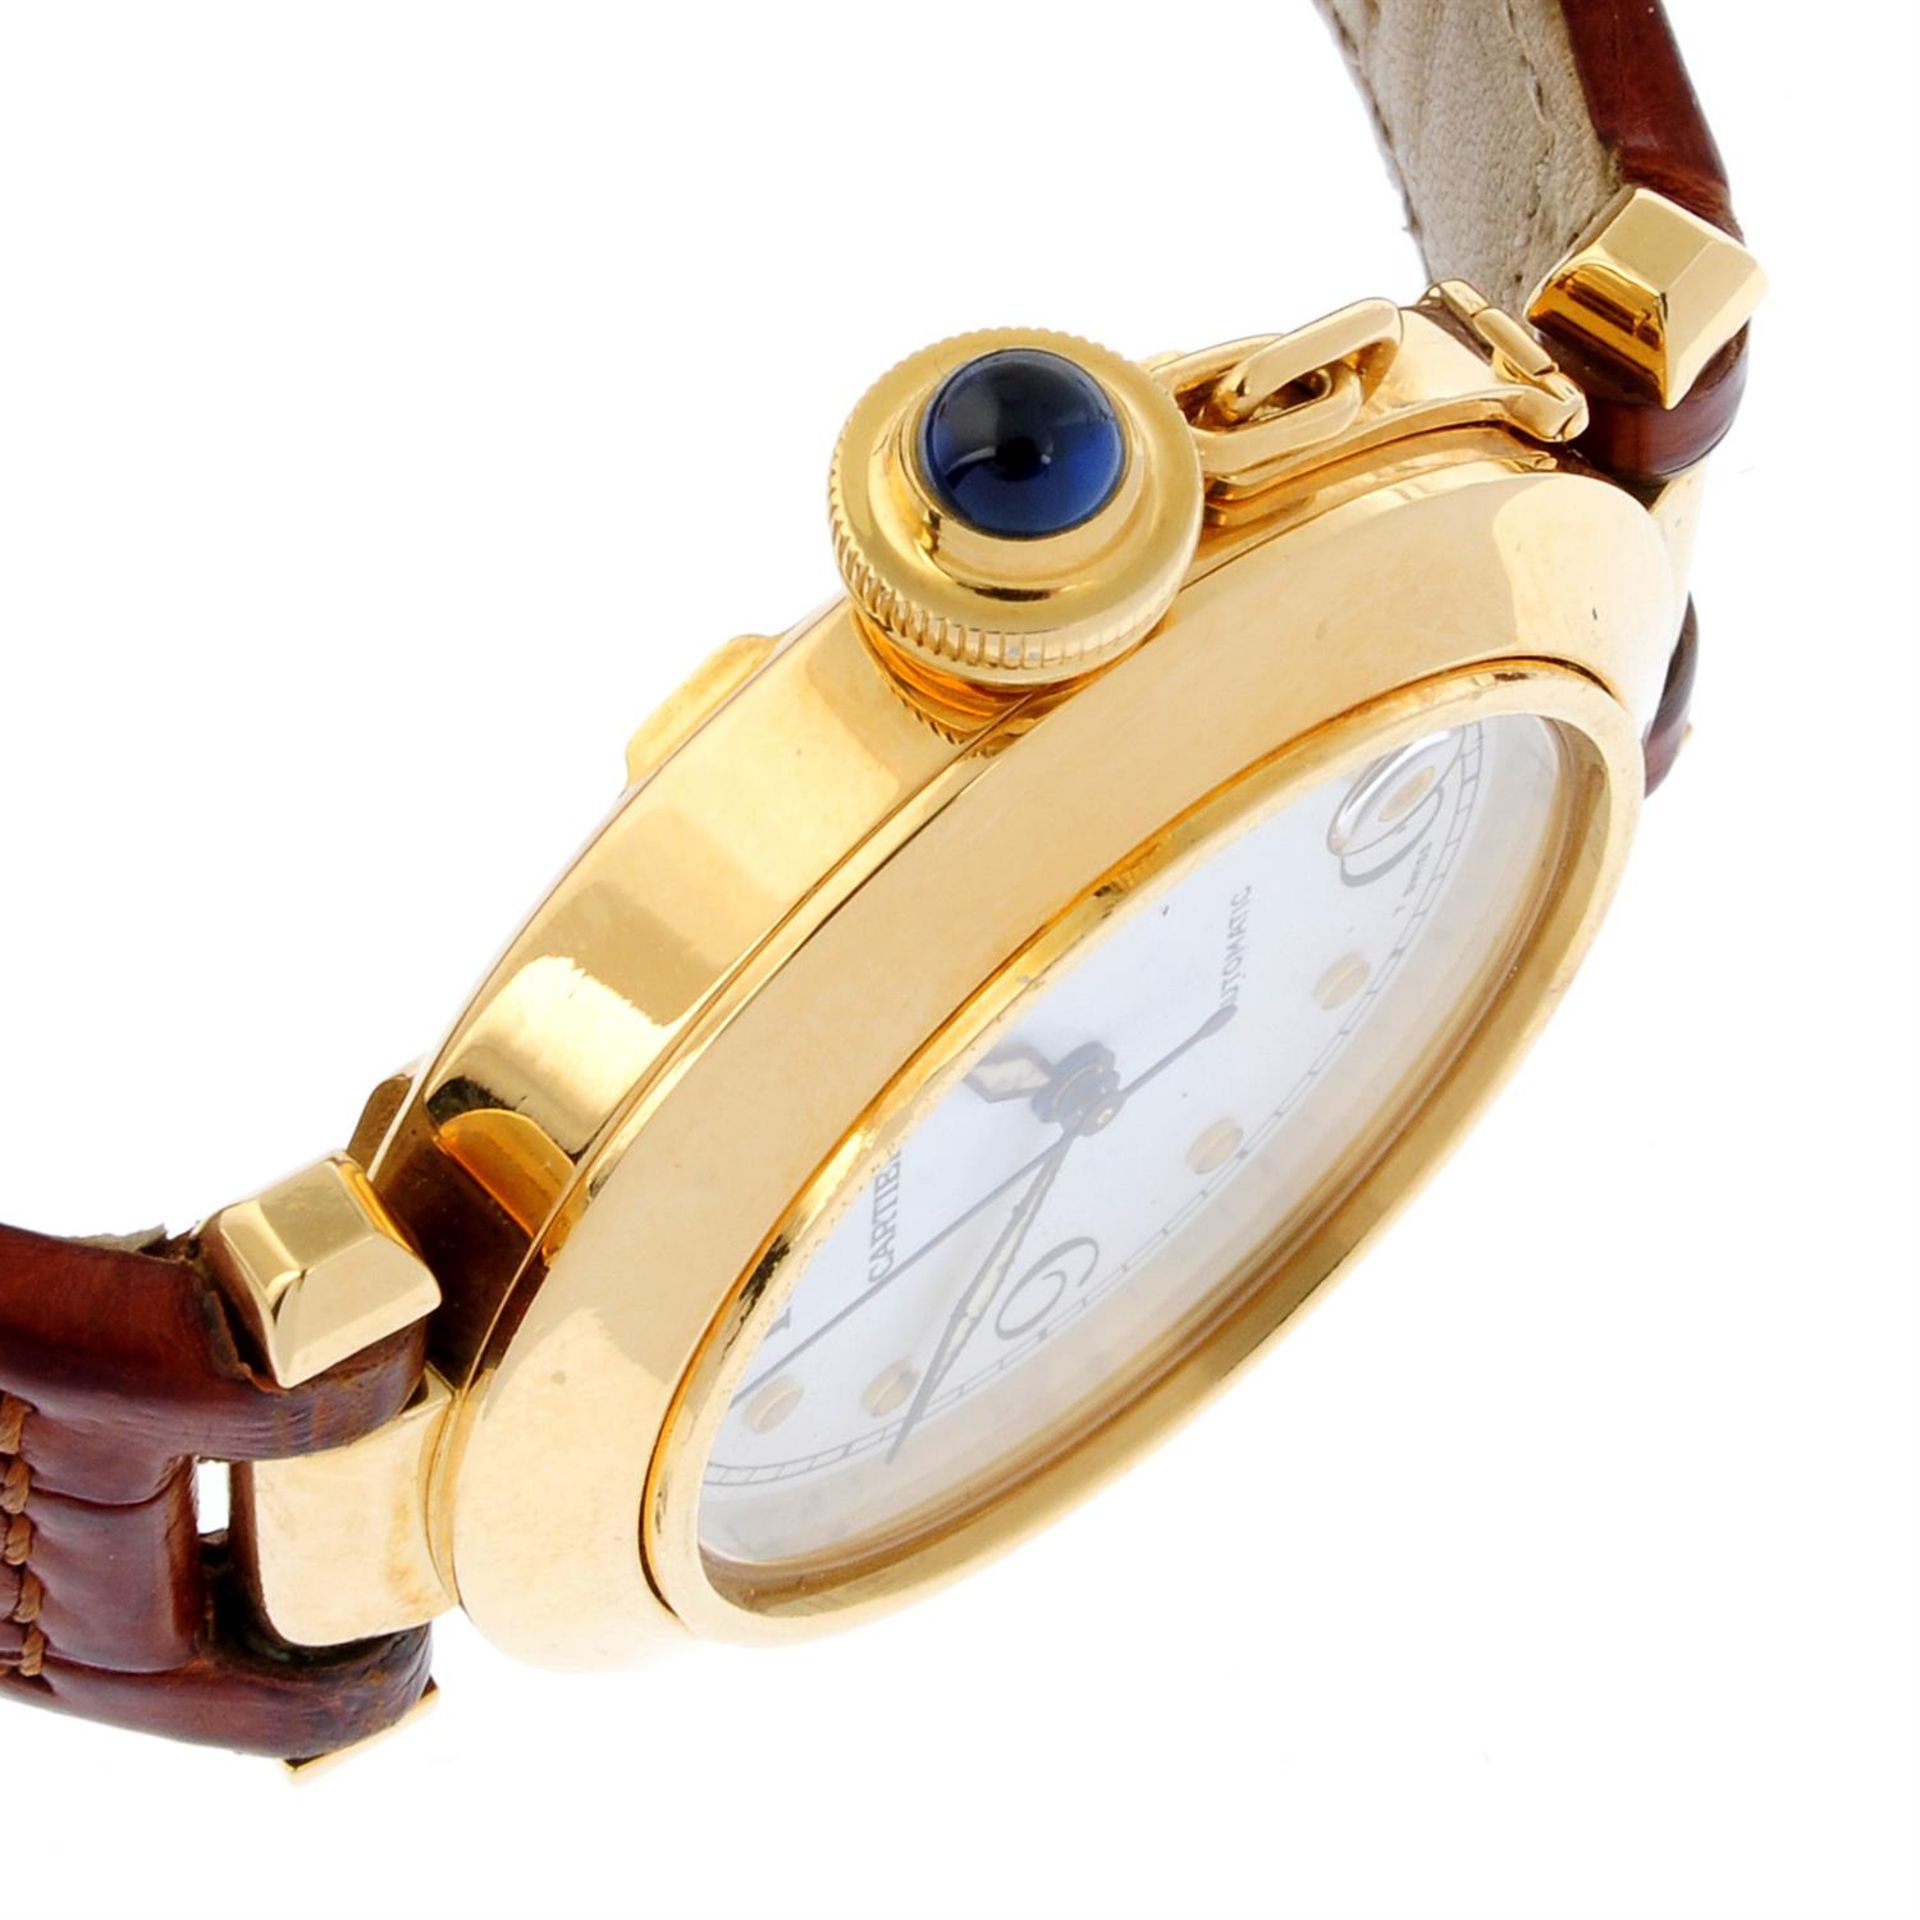 CARTIER - an 18ct yellow gold Pasha wrist watch, 35mm. - Image 3 of 6